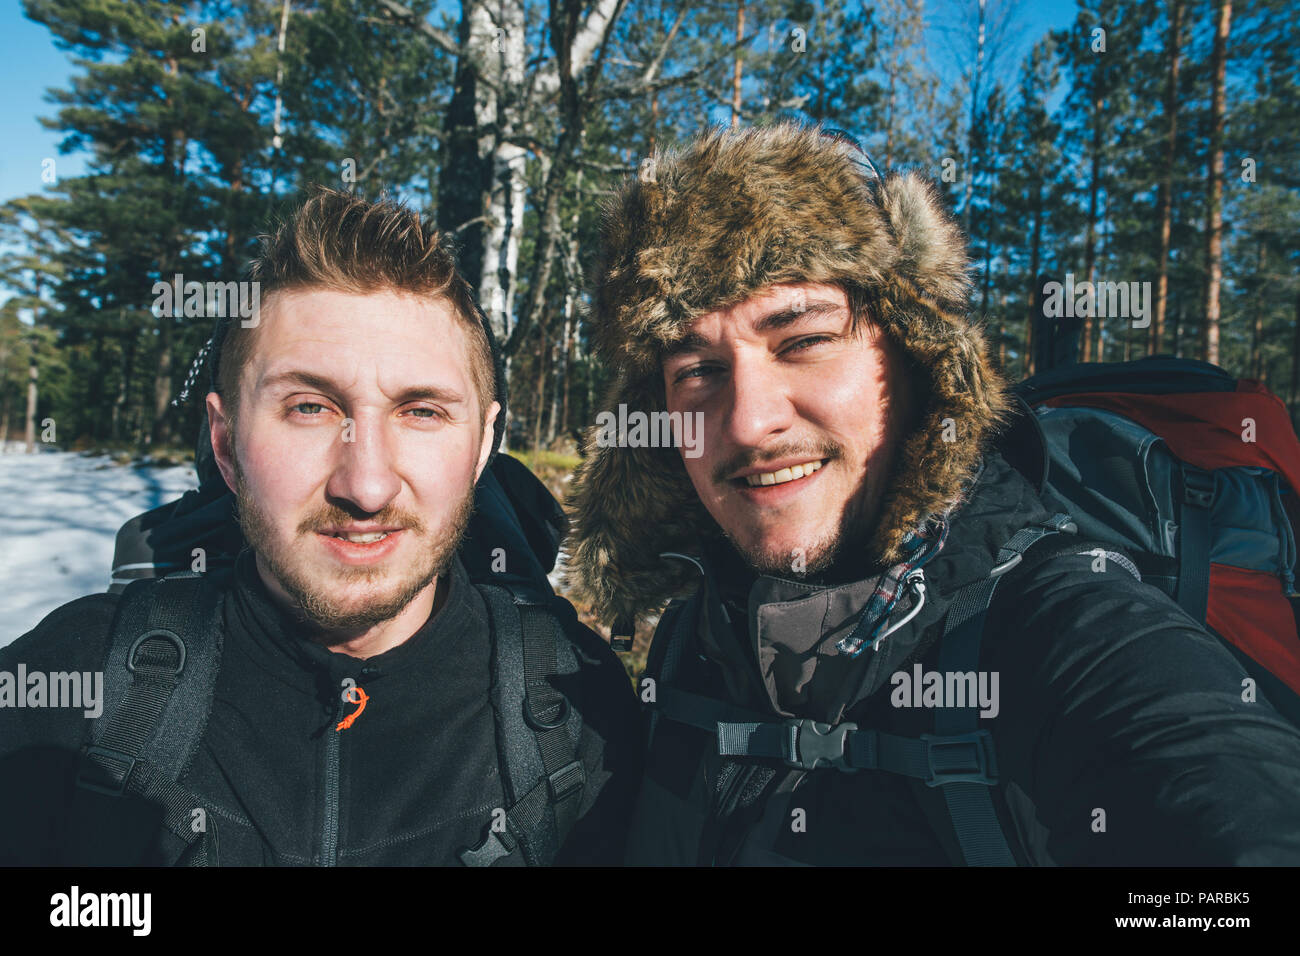 Sweden, Sodermanland, portrait of two smiling men in remote landscape in winter Stock Photo